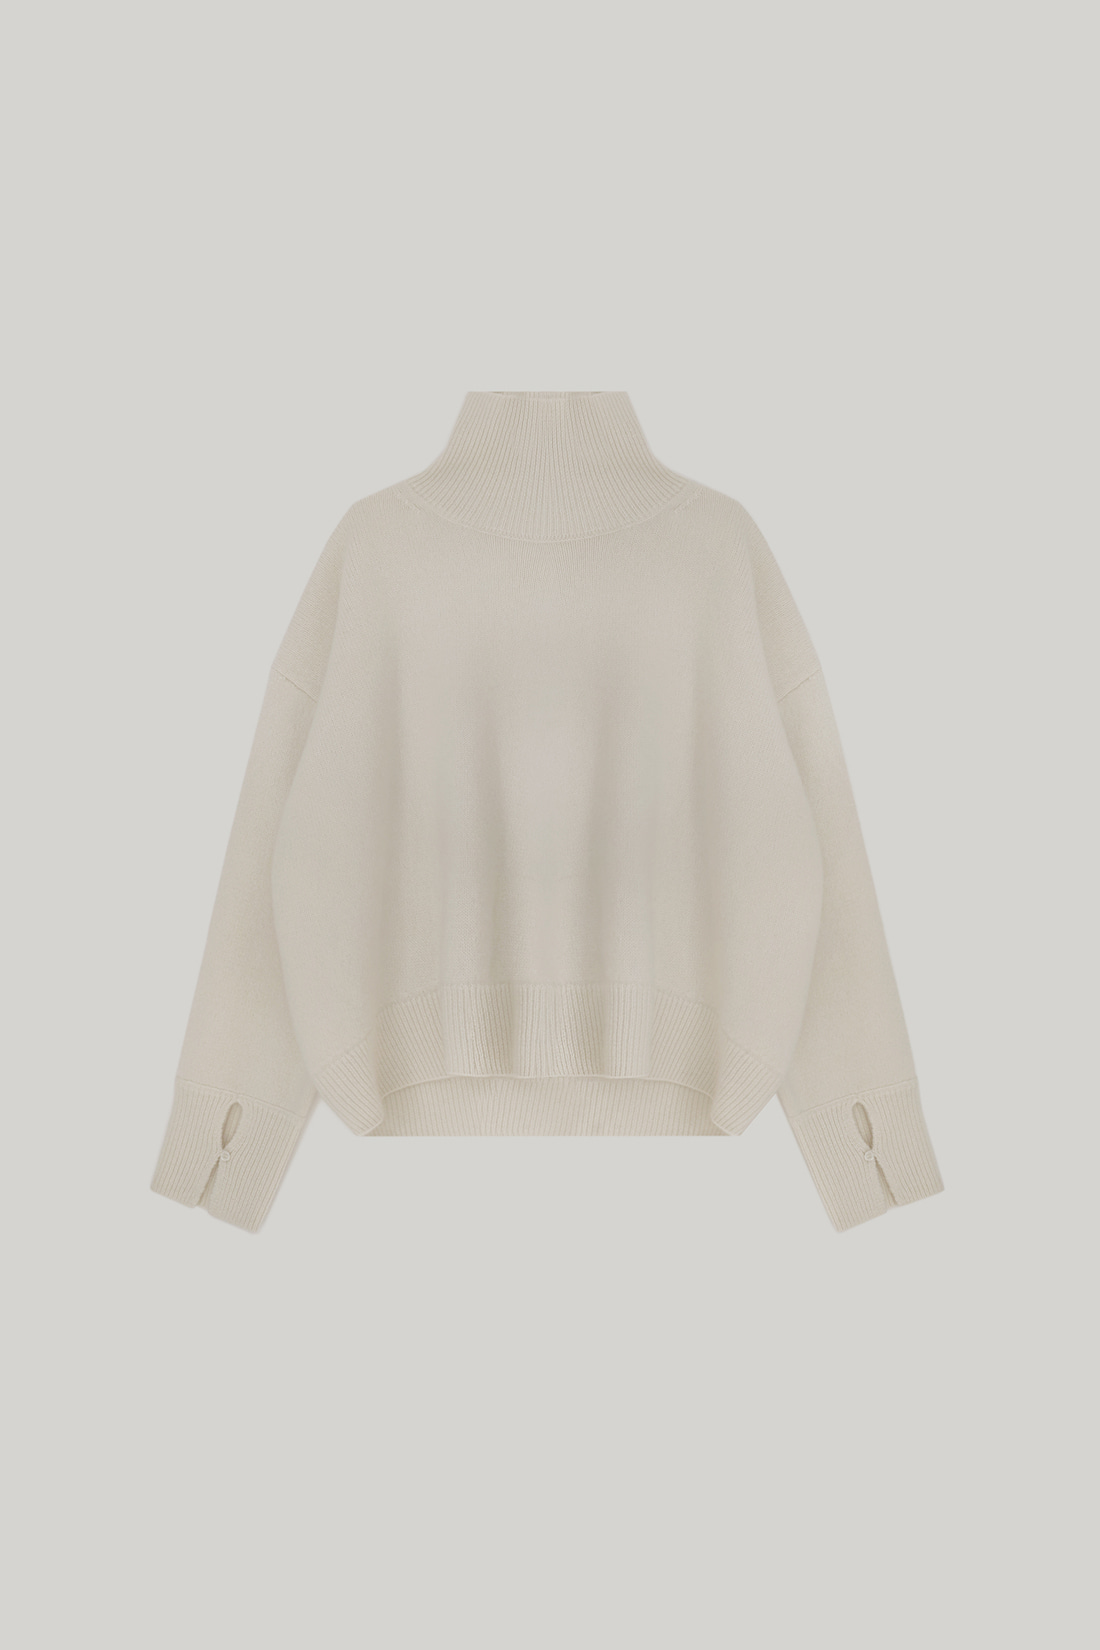 Becky Cashmere 100% High-neck Sweater (Cream)